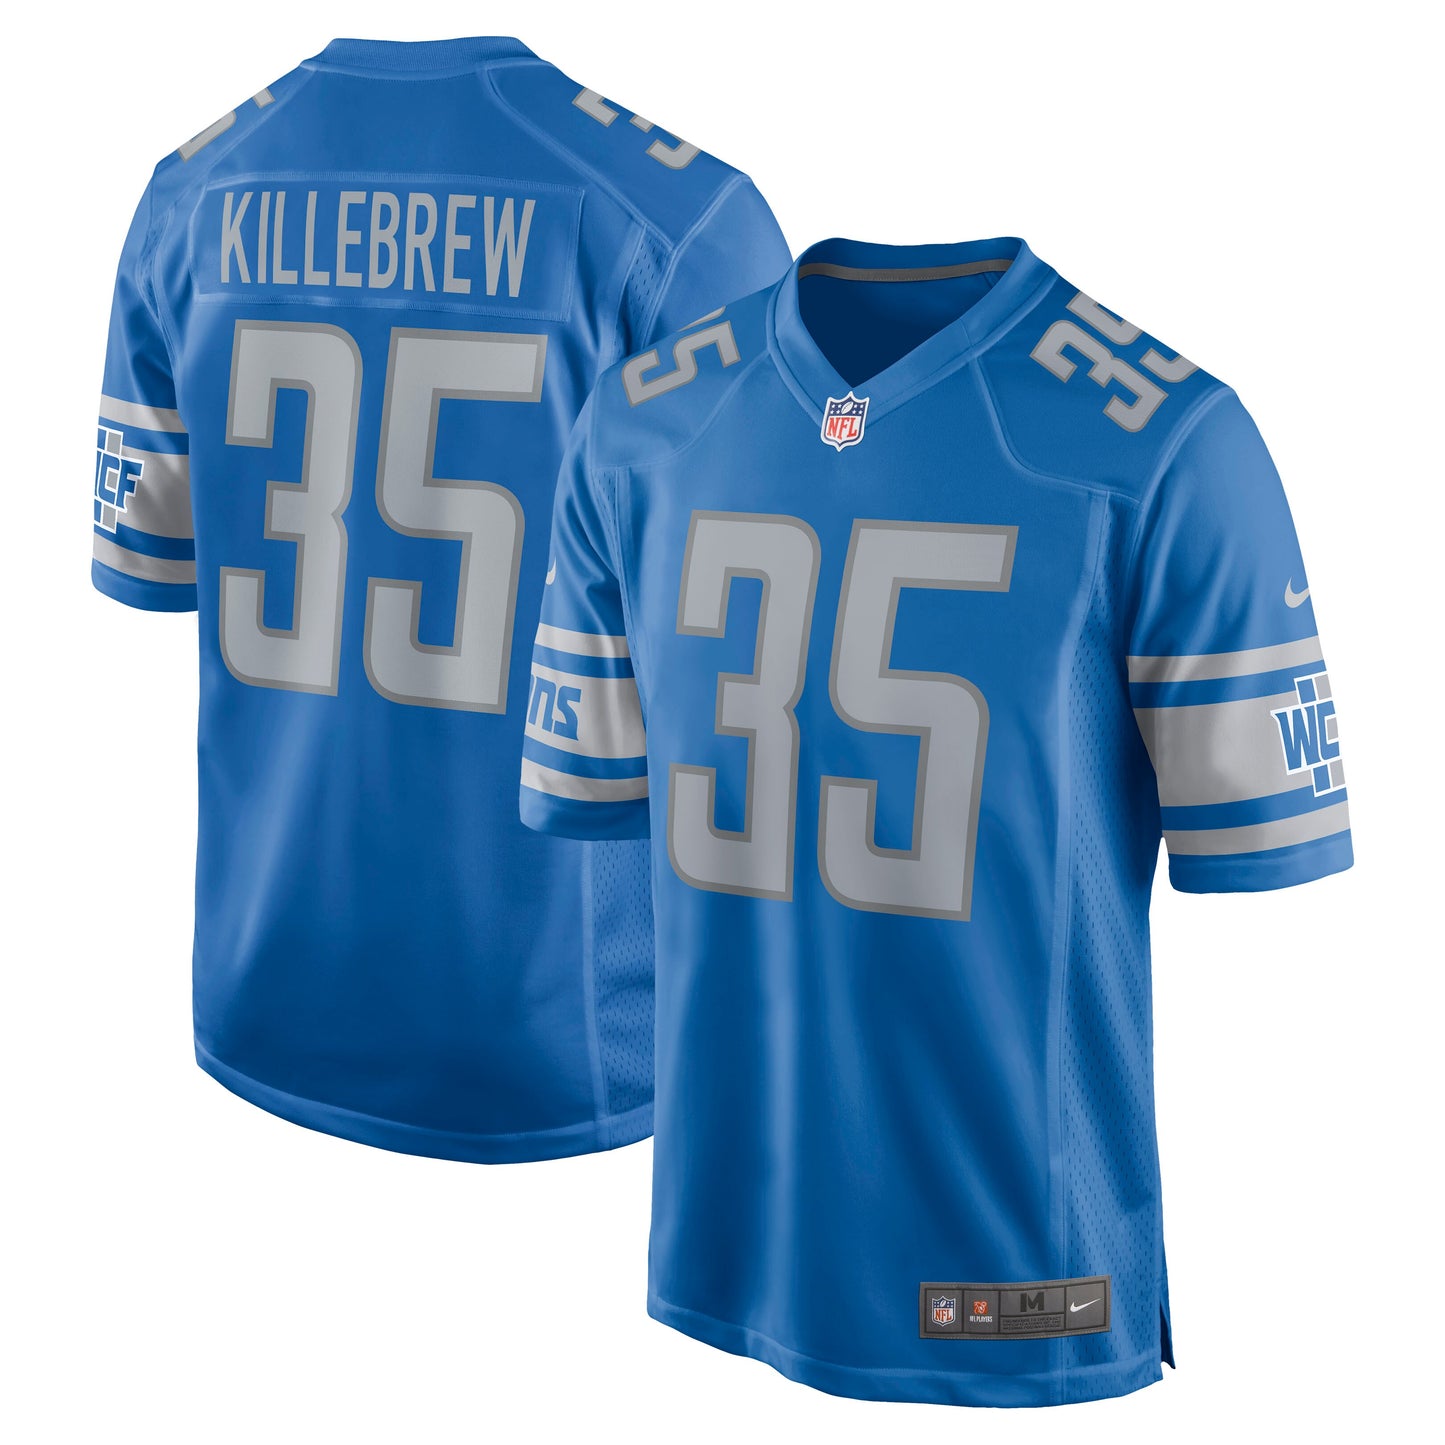 Miles Killebrew Detroit Lions Nike Game Jersey - Blue